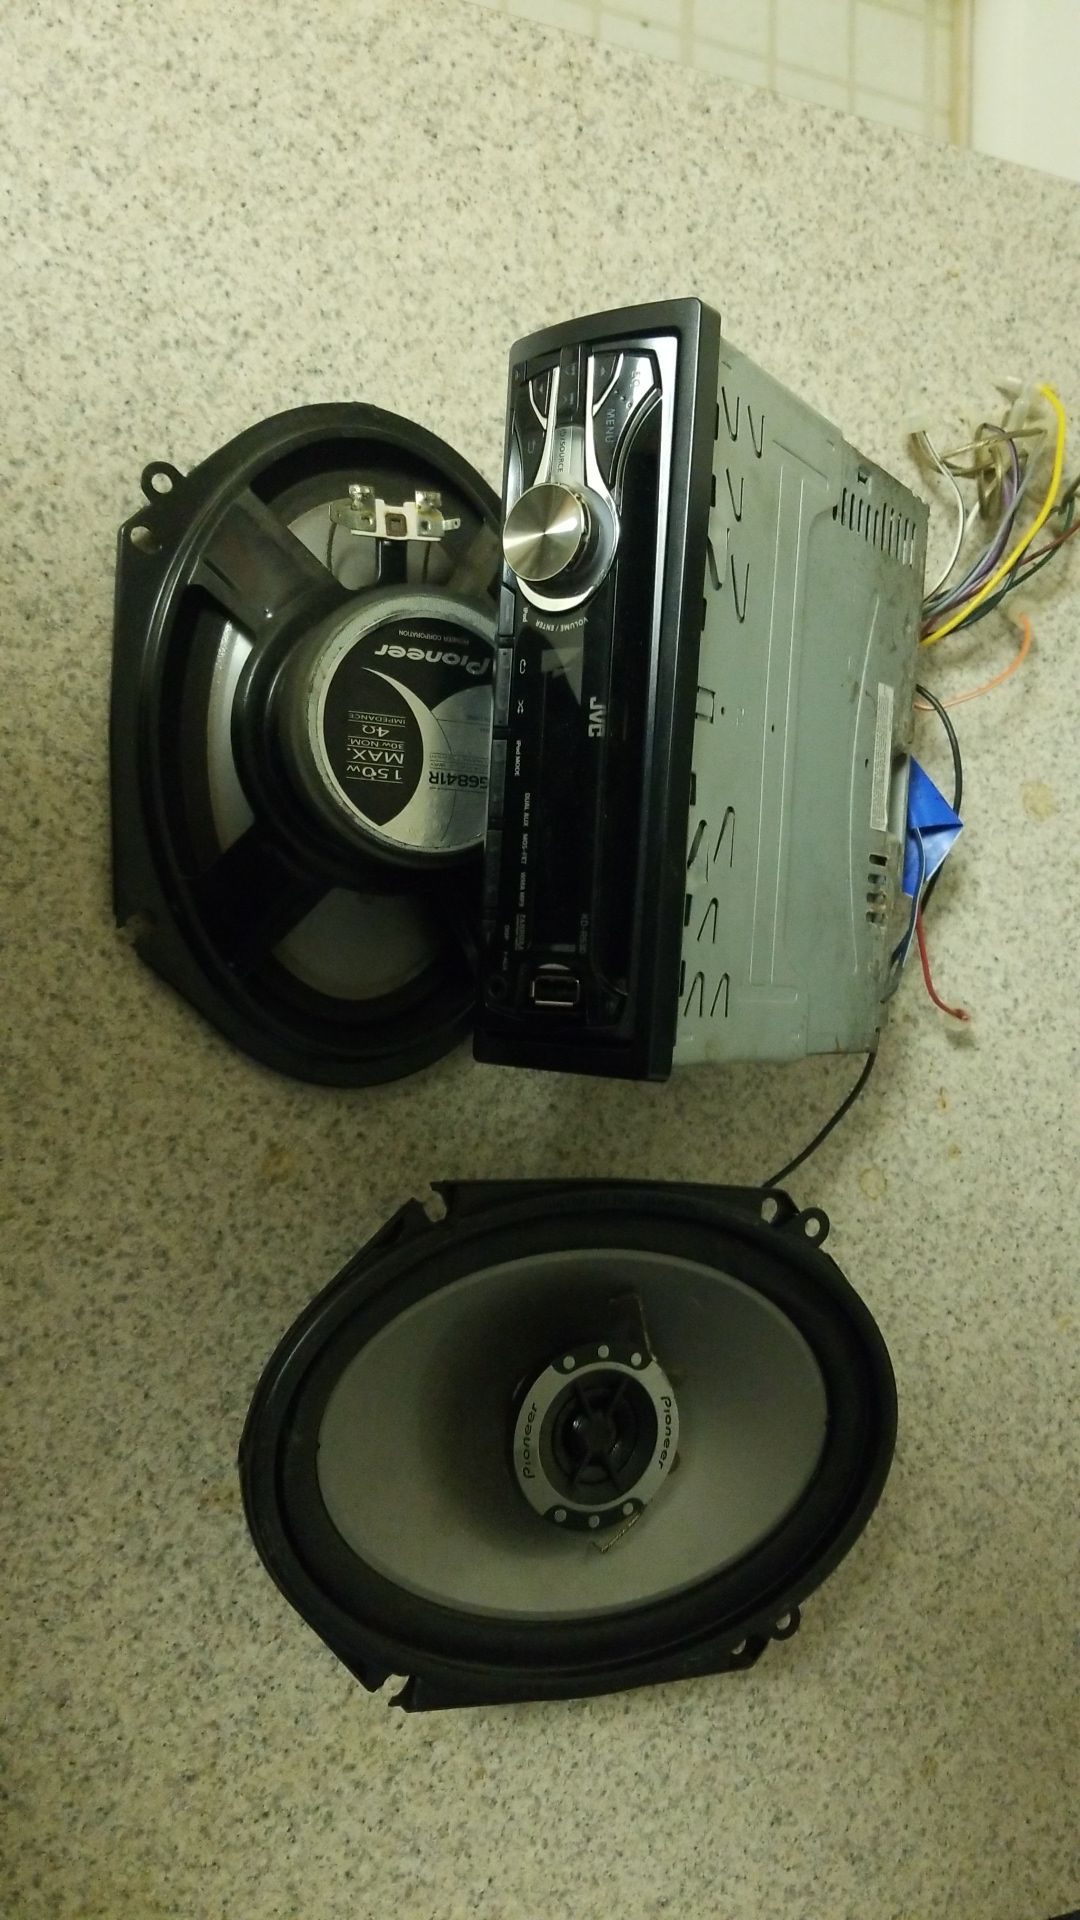 Pioneer speakers and jvc radio combo